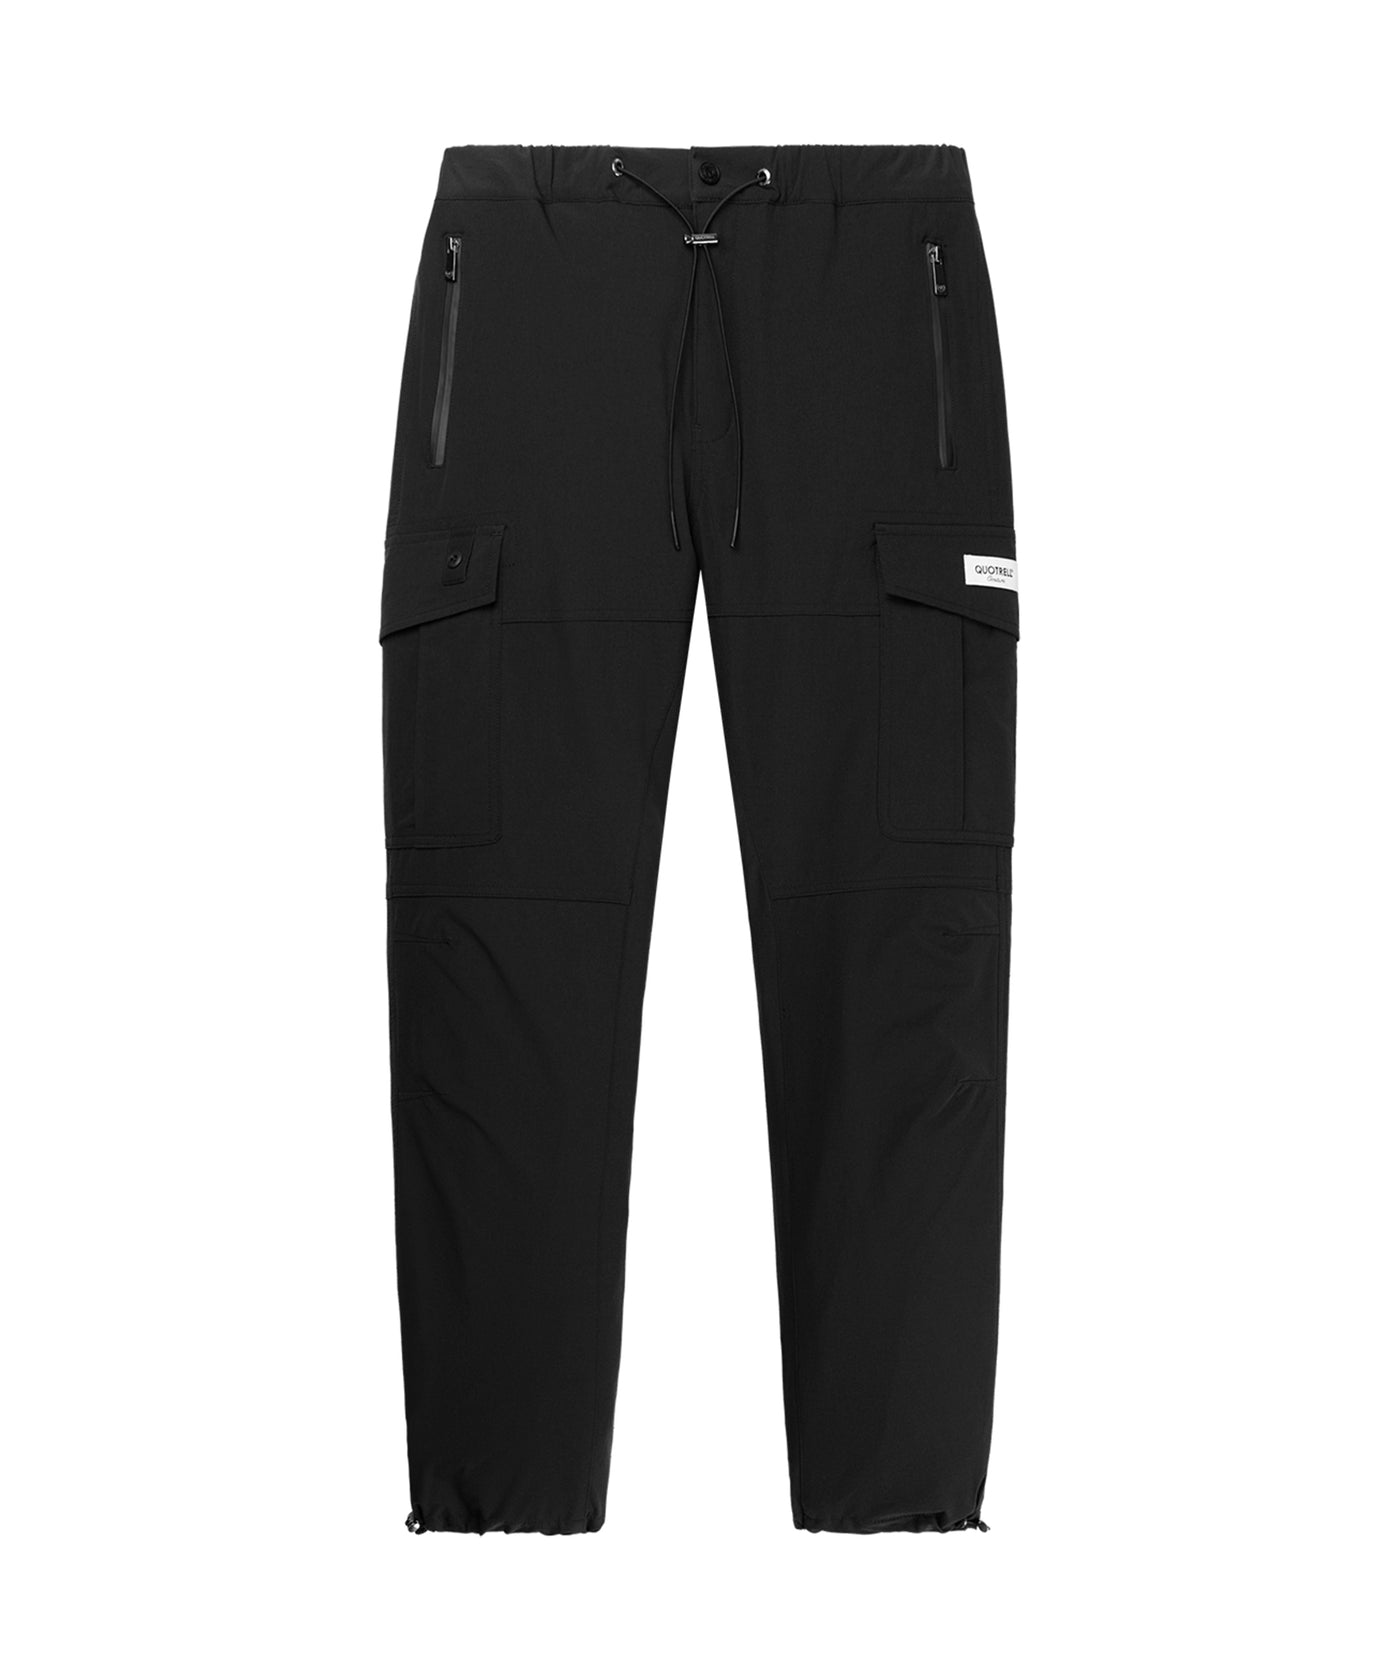 Quotrell - Seattle - Cargo Pants - Black